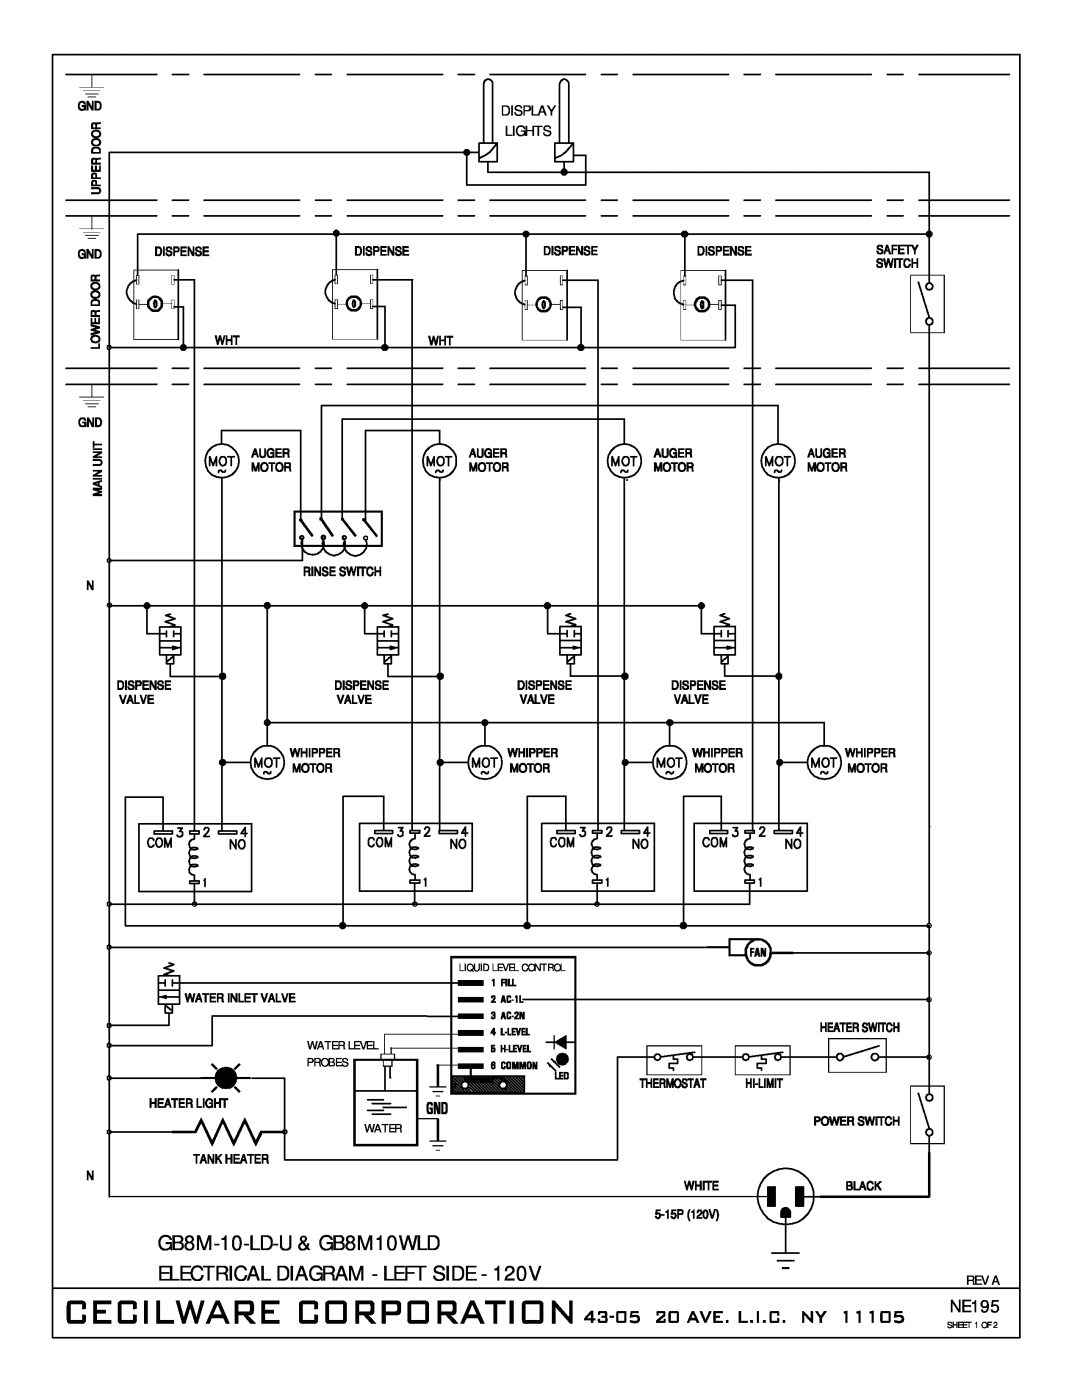 Cecilware GB6M-10-LD-U GB8M-10-LD-U& GB8M10WLD, Electrical Diagram - Left Side, Display, Lights, NE195, SHEET 1 OF 